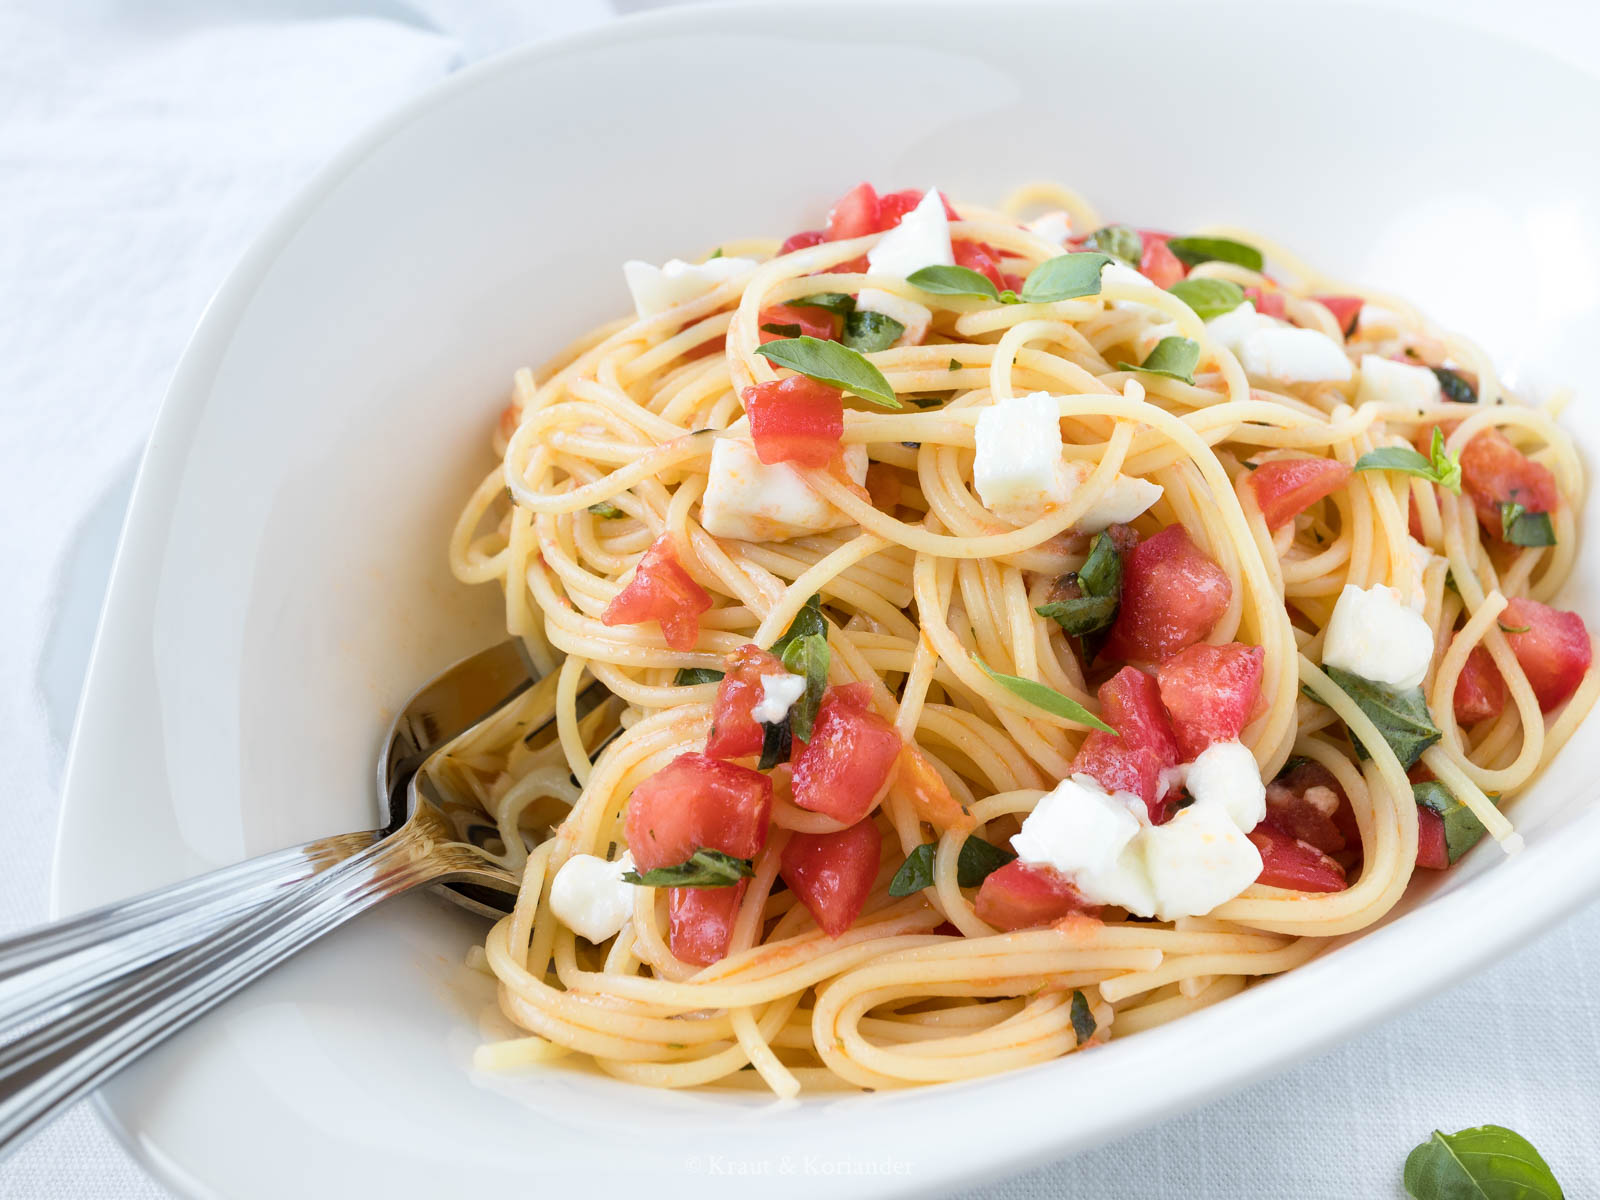 Leichte Spaghetti mit Tomaten und Mozzarella